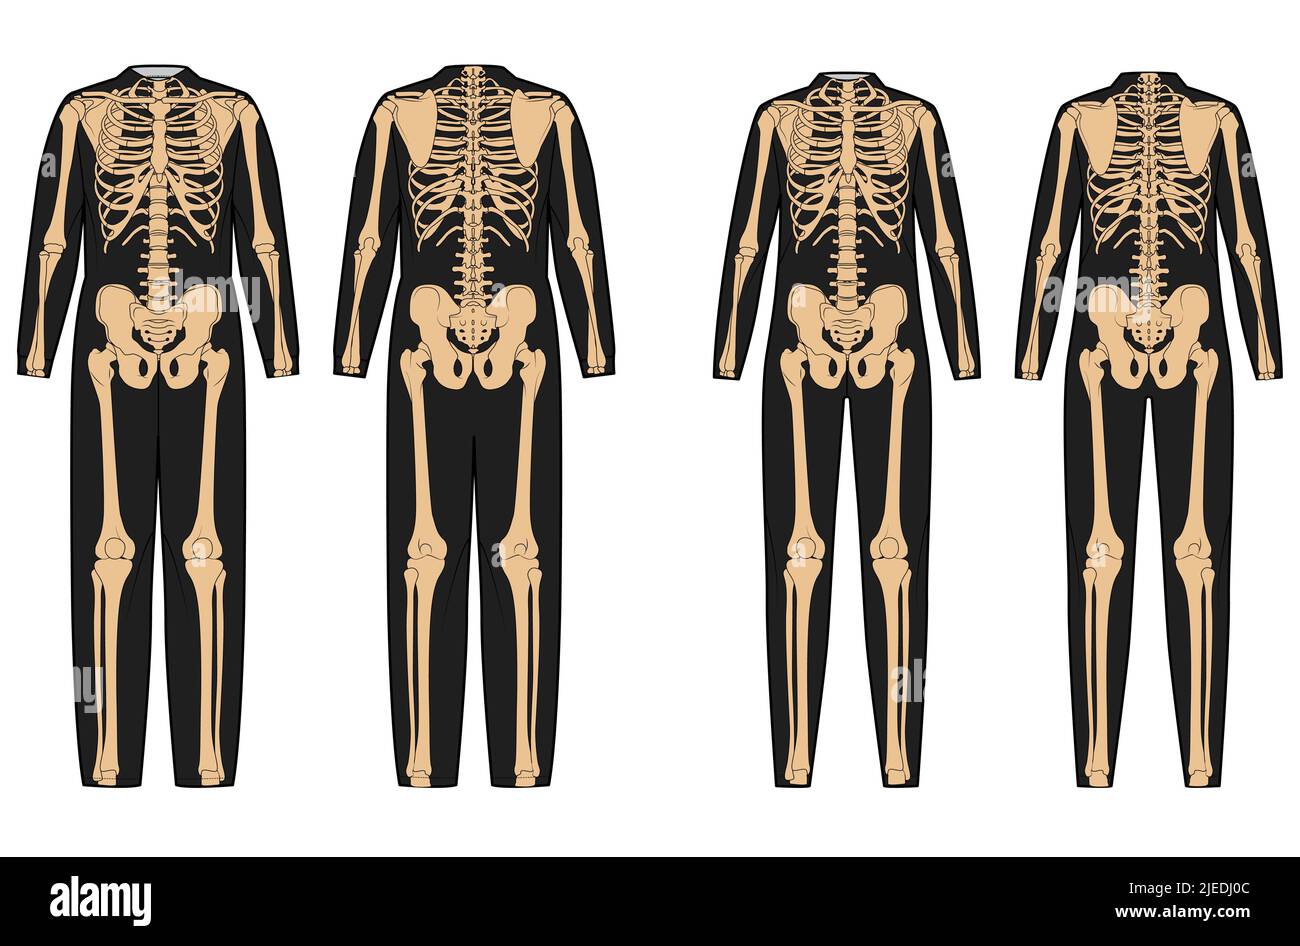 https://c8.alamy.com/comp/2JEDJ0C/set-of-skeleton-costume-human-bones-on-bodysuit-front-back-view-men-women-for-halloween-festivals-printing-on-clothes-for-day-of-the-dead-flat-black-beige-color-concept-vector-illustration-isolated-2JEDJ0C.jpg